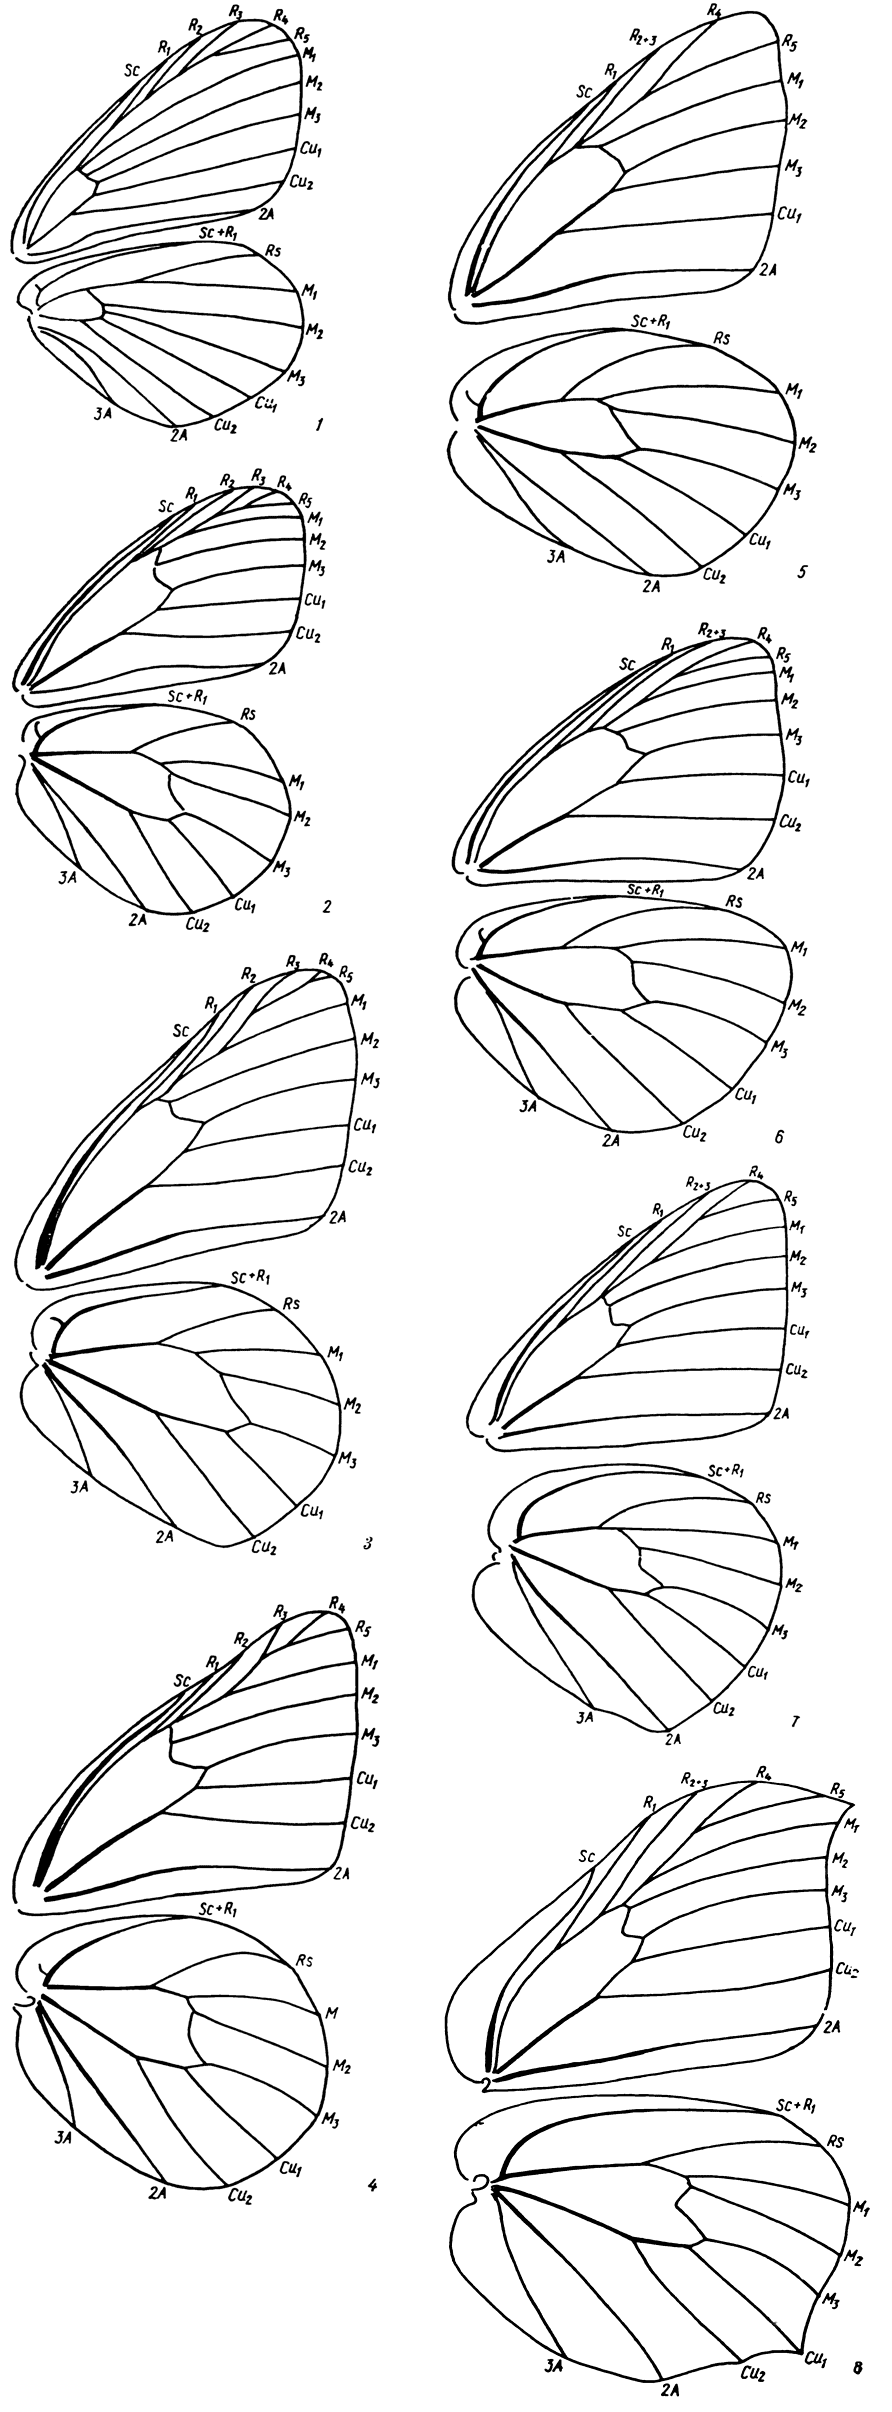 . 16.       Pieridae: 1 - Leptidea sinapis (L.) (Dismorphiinae), 2 - Antbocharis cardamines (L.) (Anthocharinae), 3 - Euchloe ausonia volgensis Krul. (Anthocharinae), 4 - Zegris eupheme (Esp.) (Anthocharinae), 5 - Pontia daplidice (L.) (Pierinae), 6 - Pieris (Artogeia) rapae (L.) (Pierinae), 7 - Colias crocea (Fourc.) (Coliadi nae), 8 - Gonepteryx rhamni (L.) (Coliadinae)